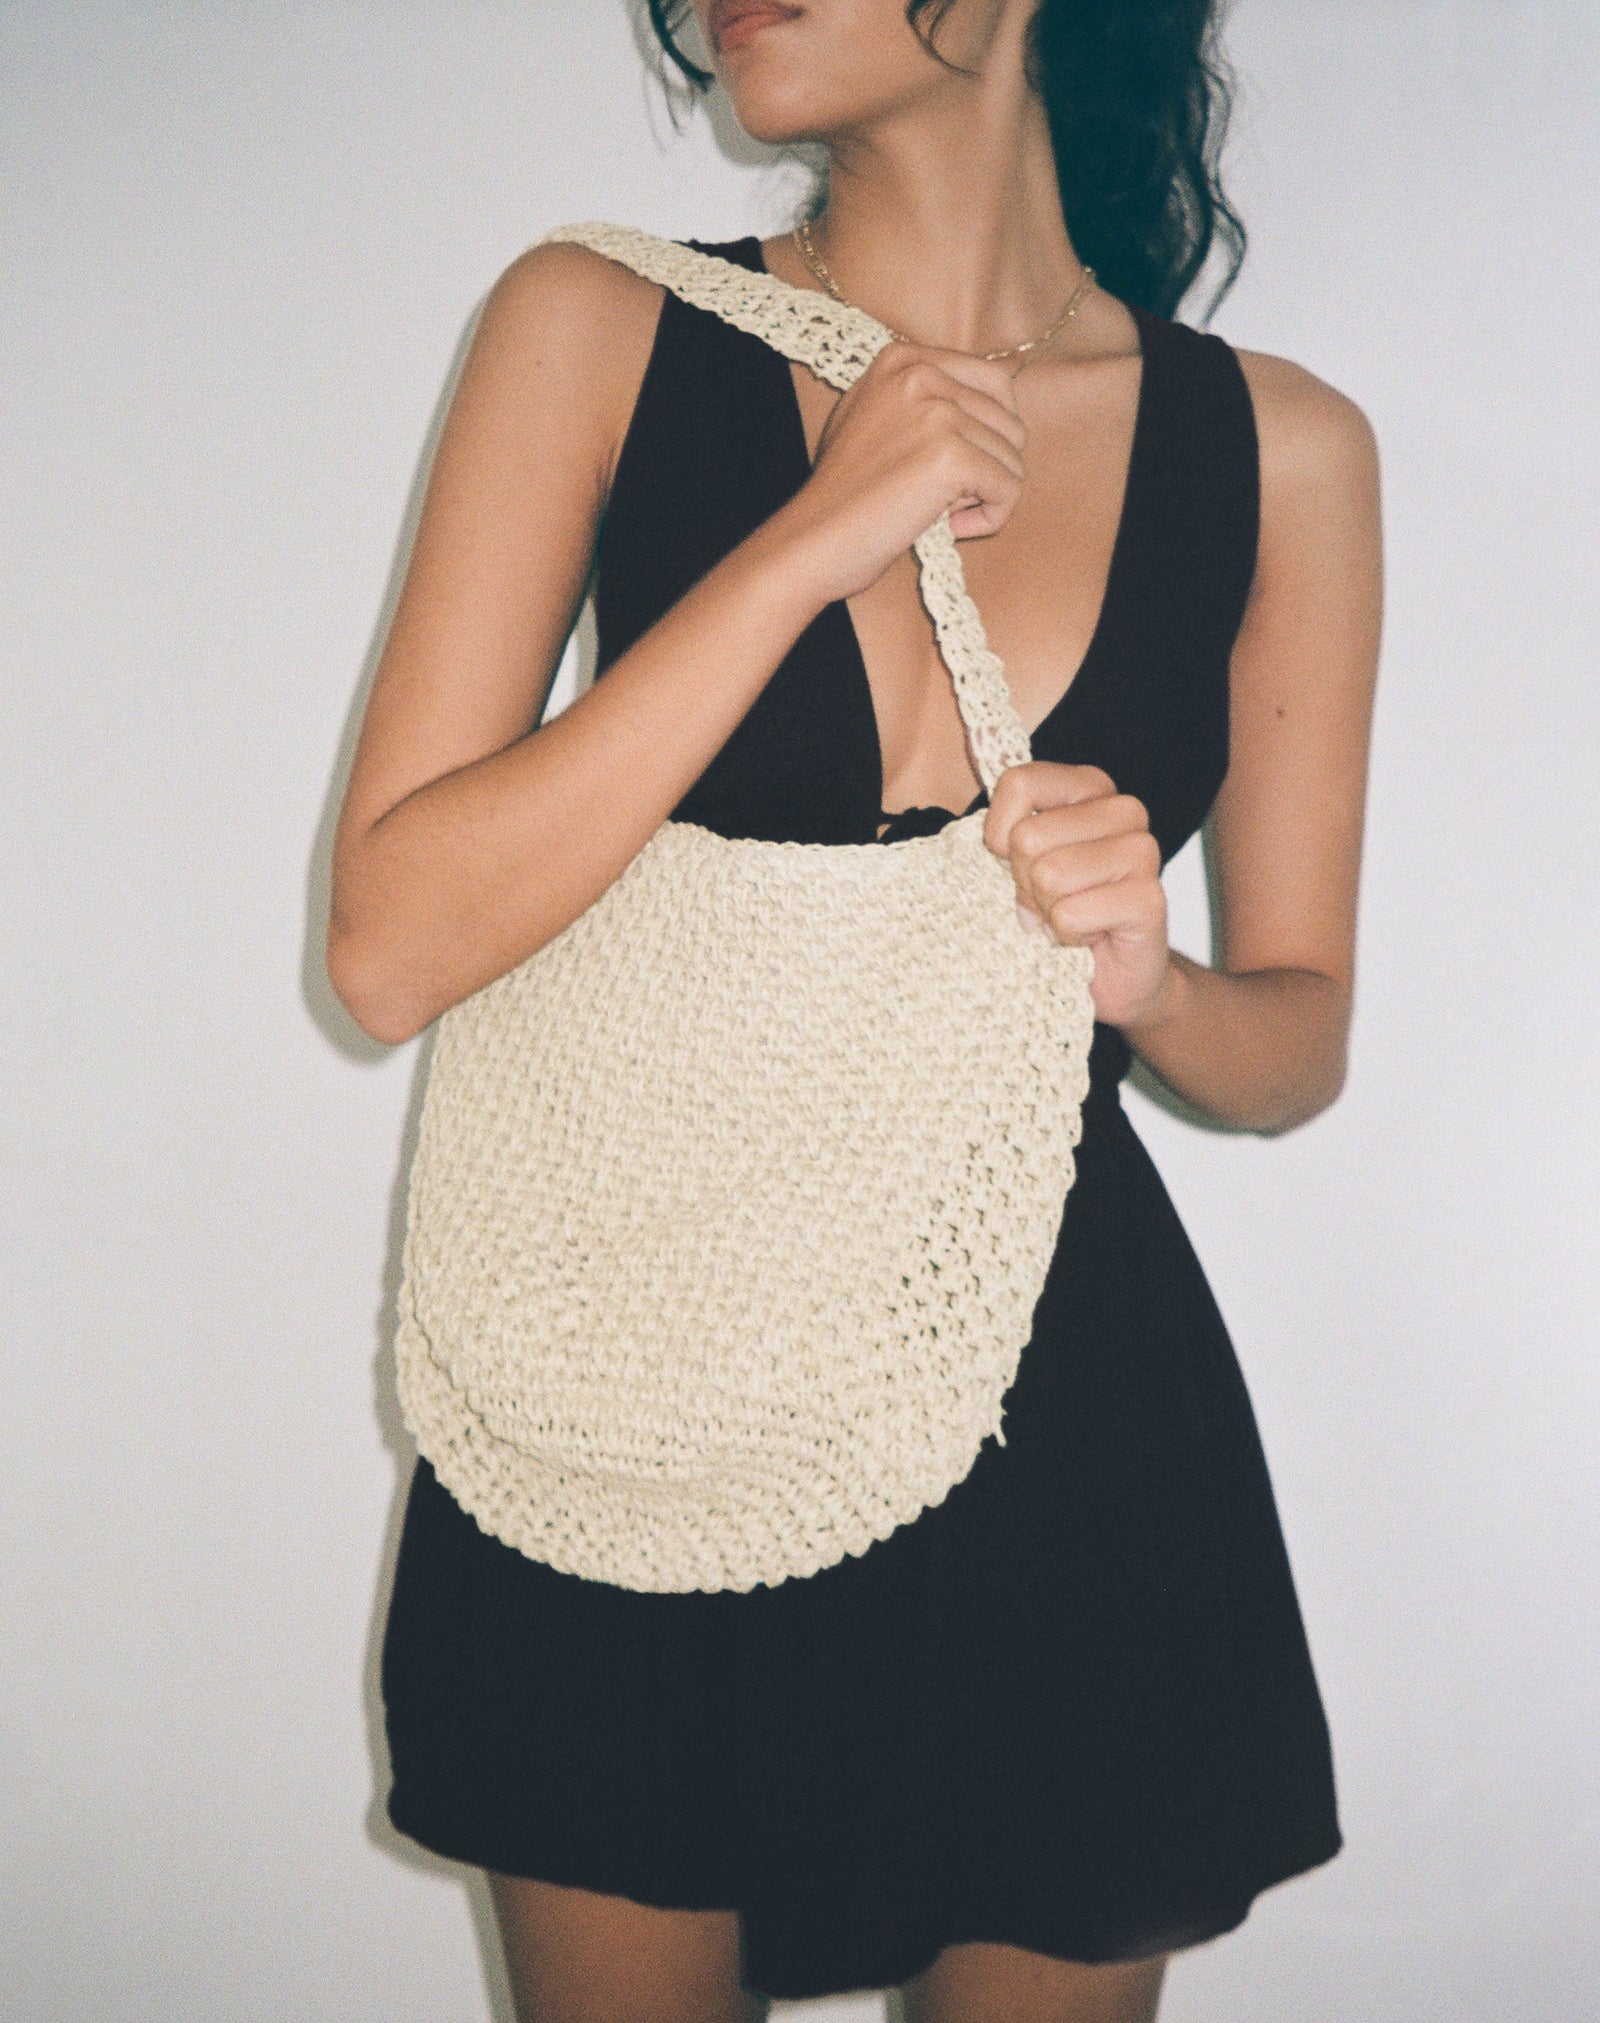 Black Crochet Tote Bag